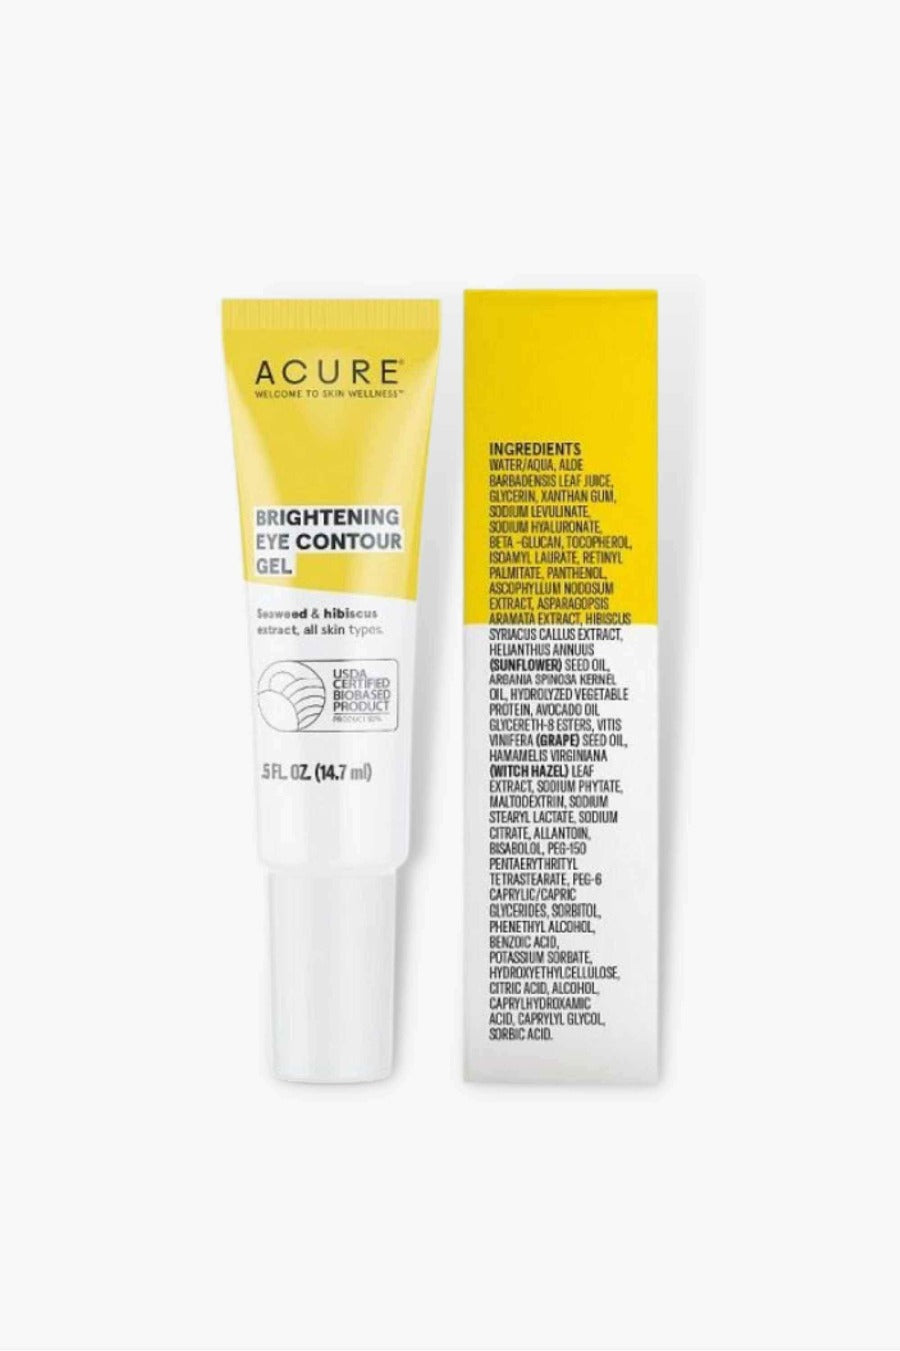 Acure brightening eye cream gel countour australian skincare shop online